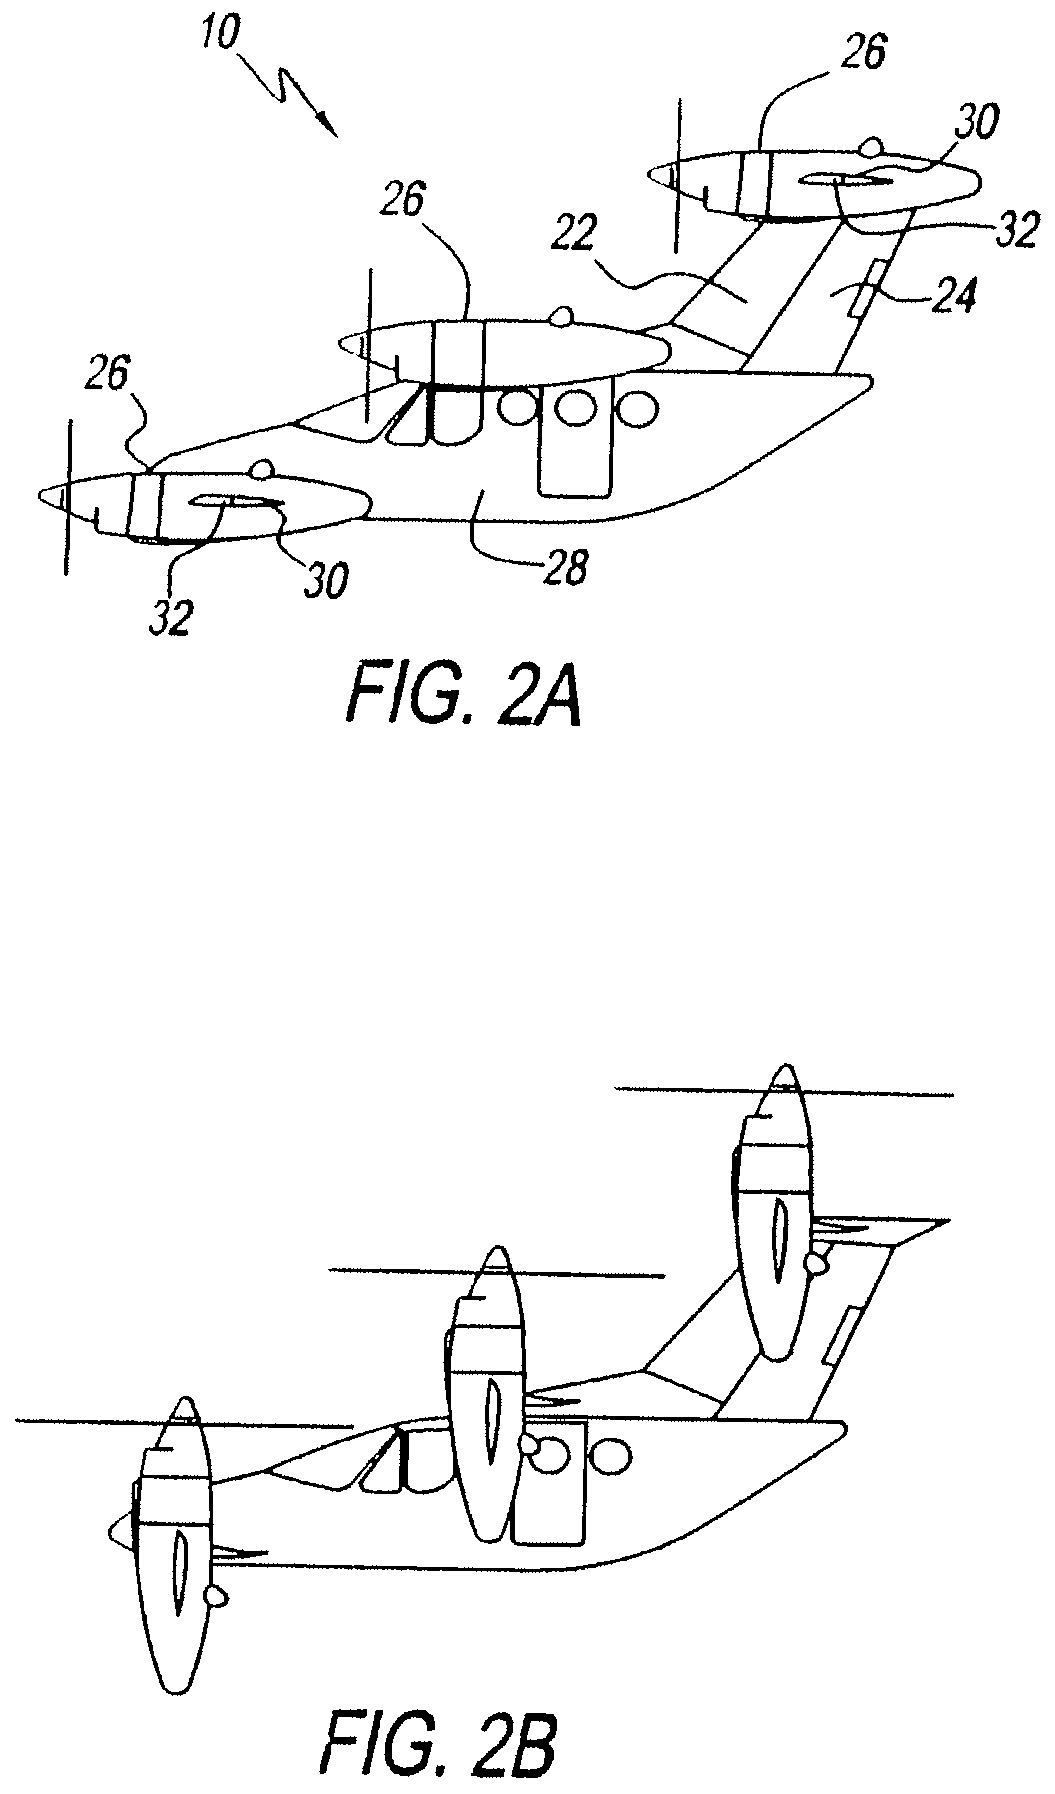 Three wing, six-tilt propulsion unit, VTOL aircraft